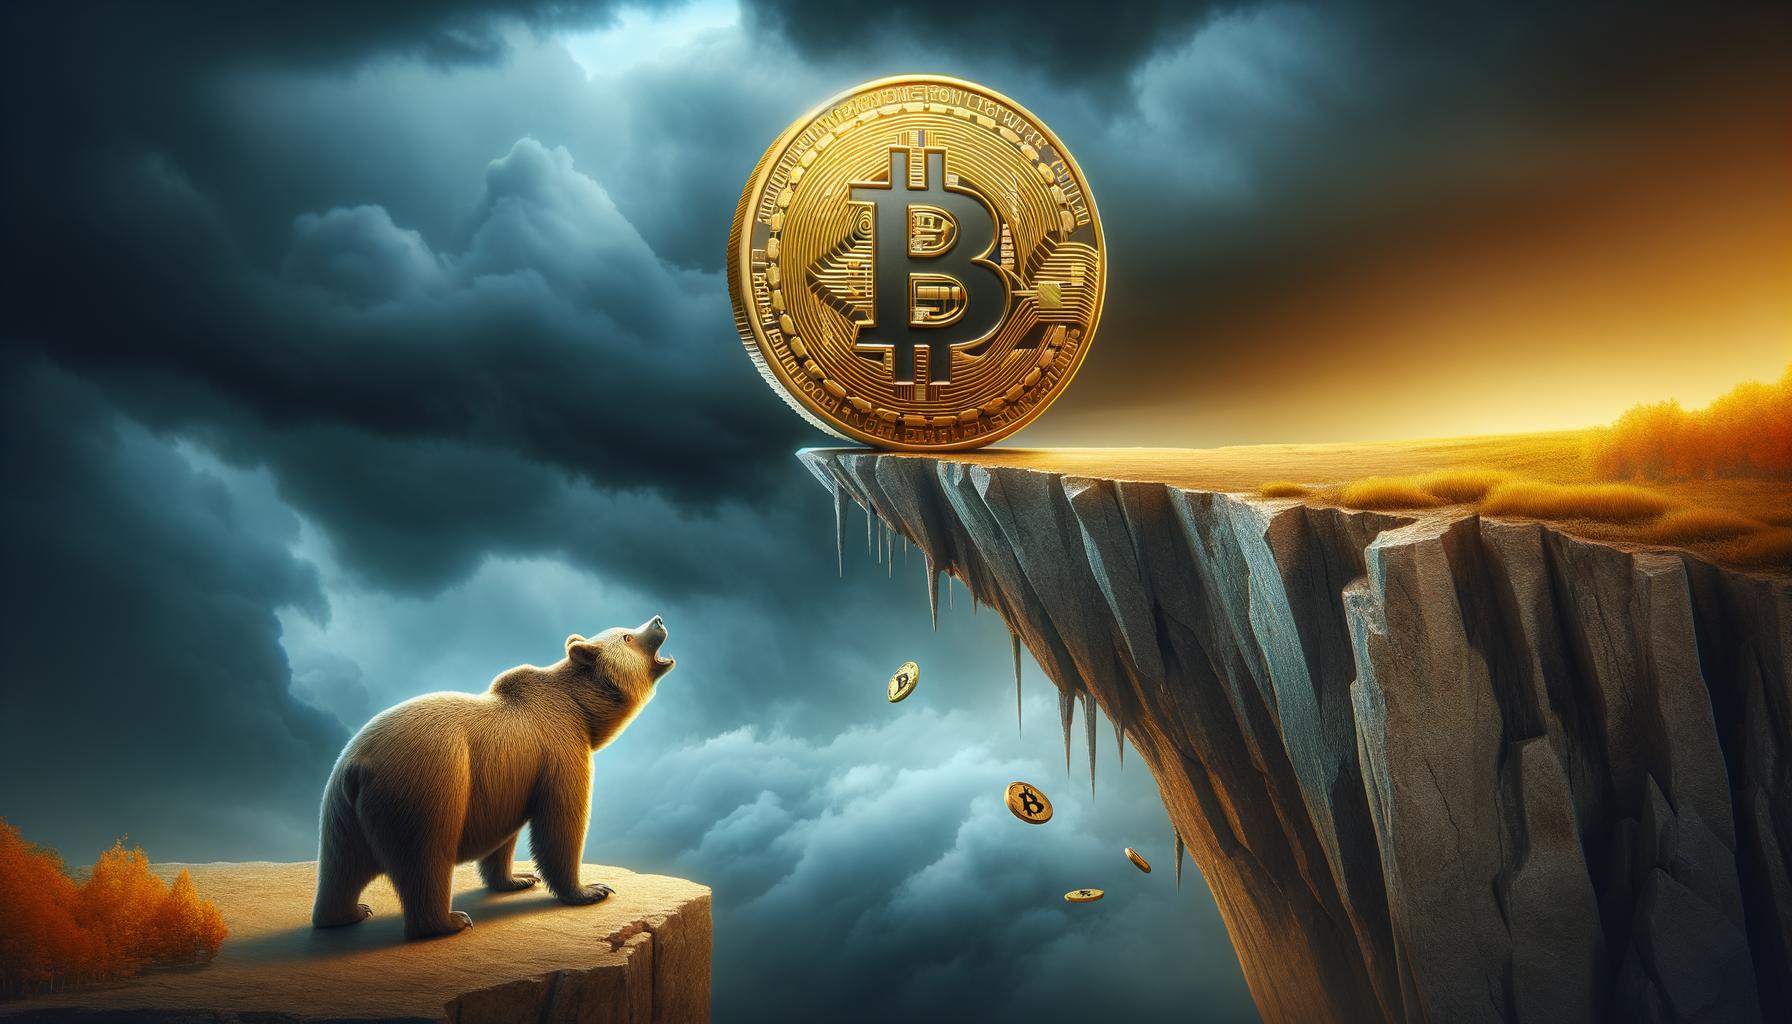 Bitcoin Price Falls Again: Is Bearish Momentum Returning?